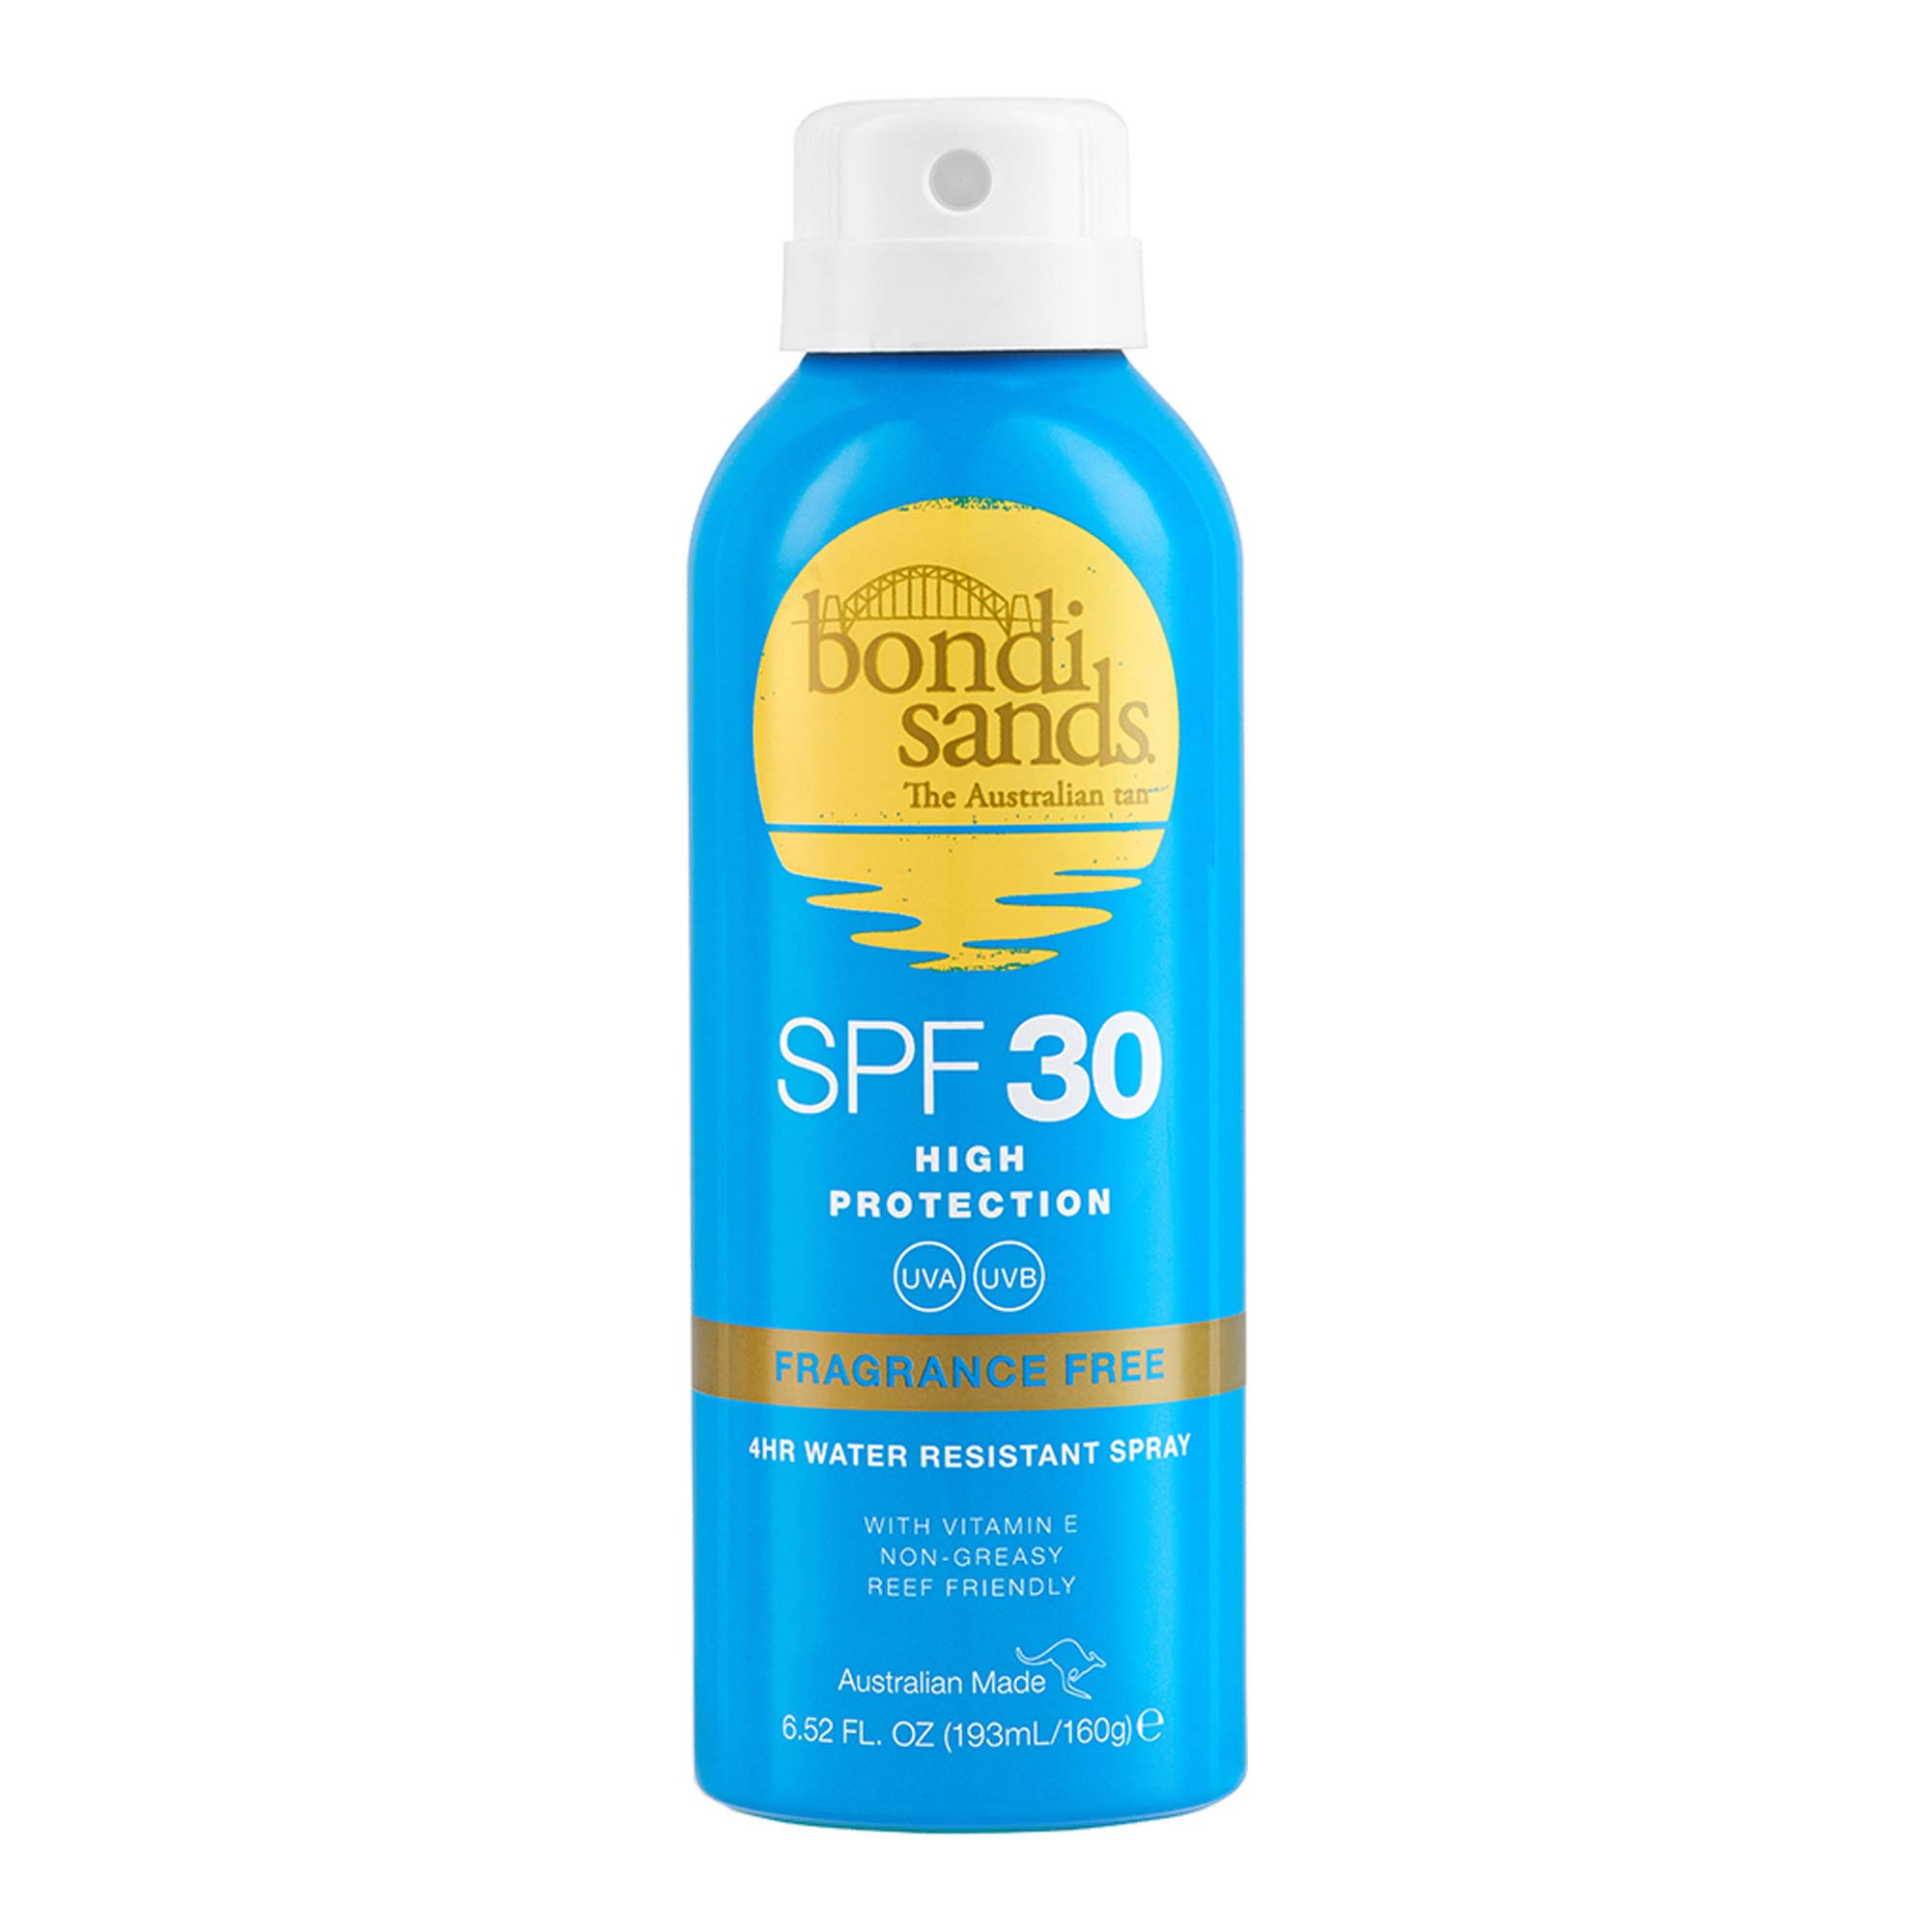 Bondi Sands Sunscreen Spray Fragrance Free Spf 30 Douglas